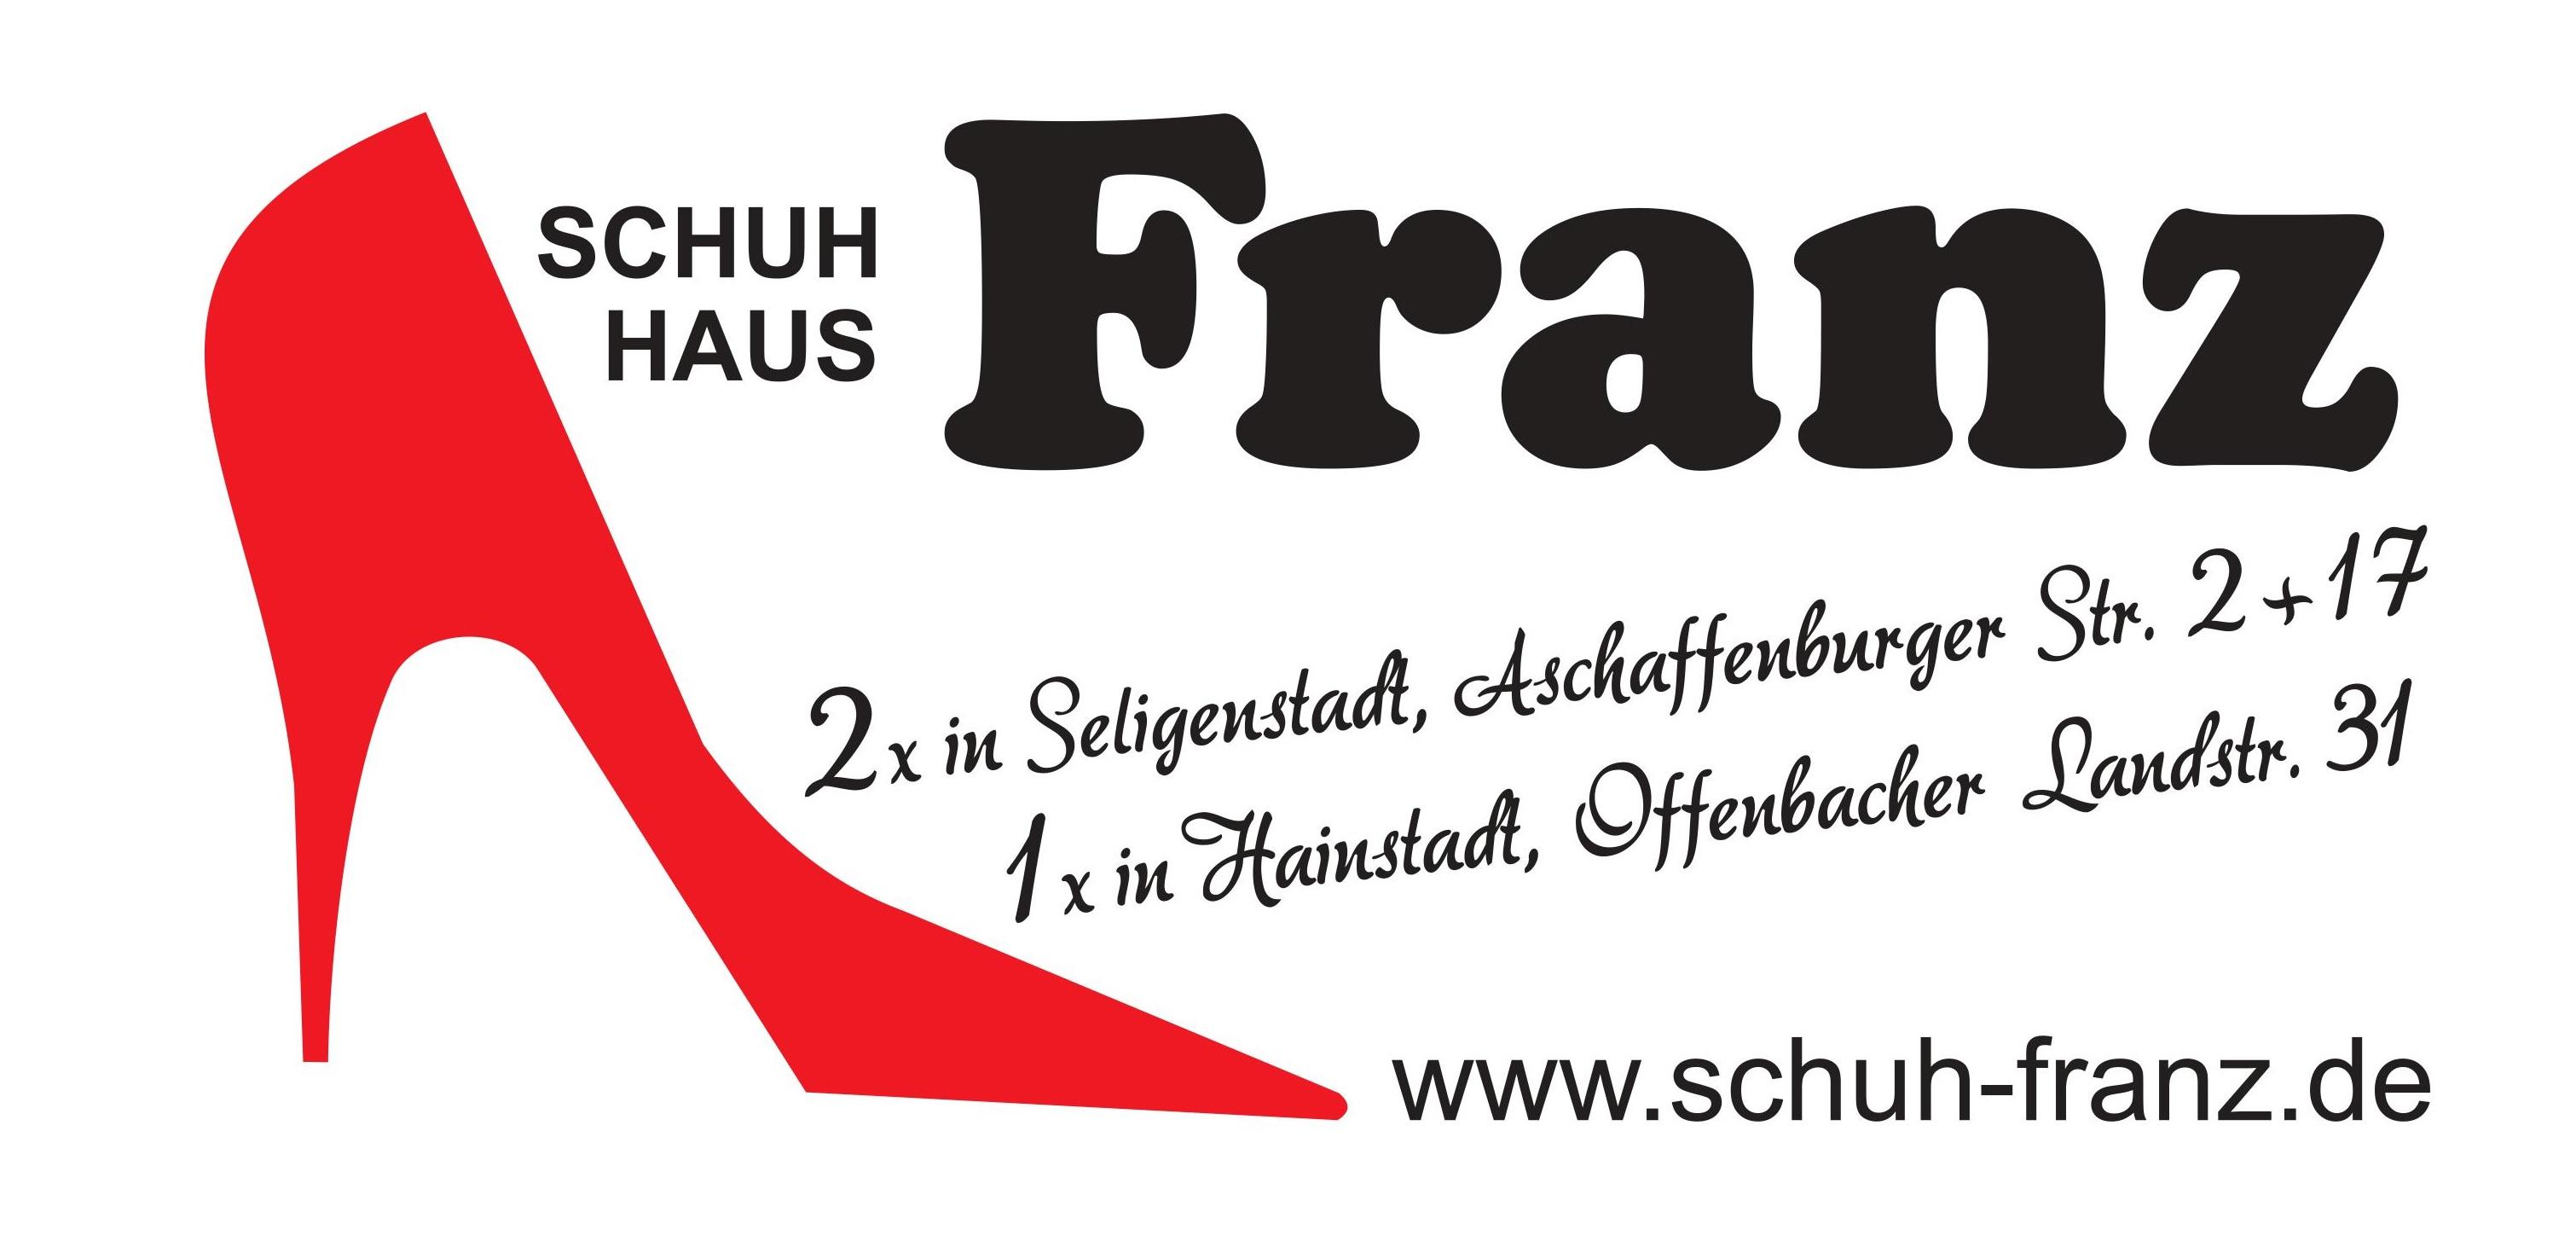 Schuhhaus Franz family